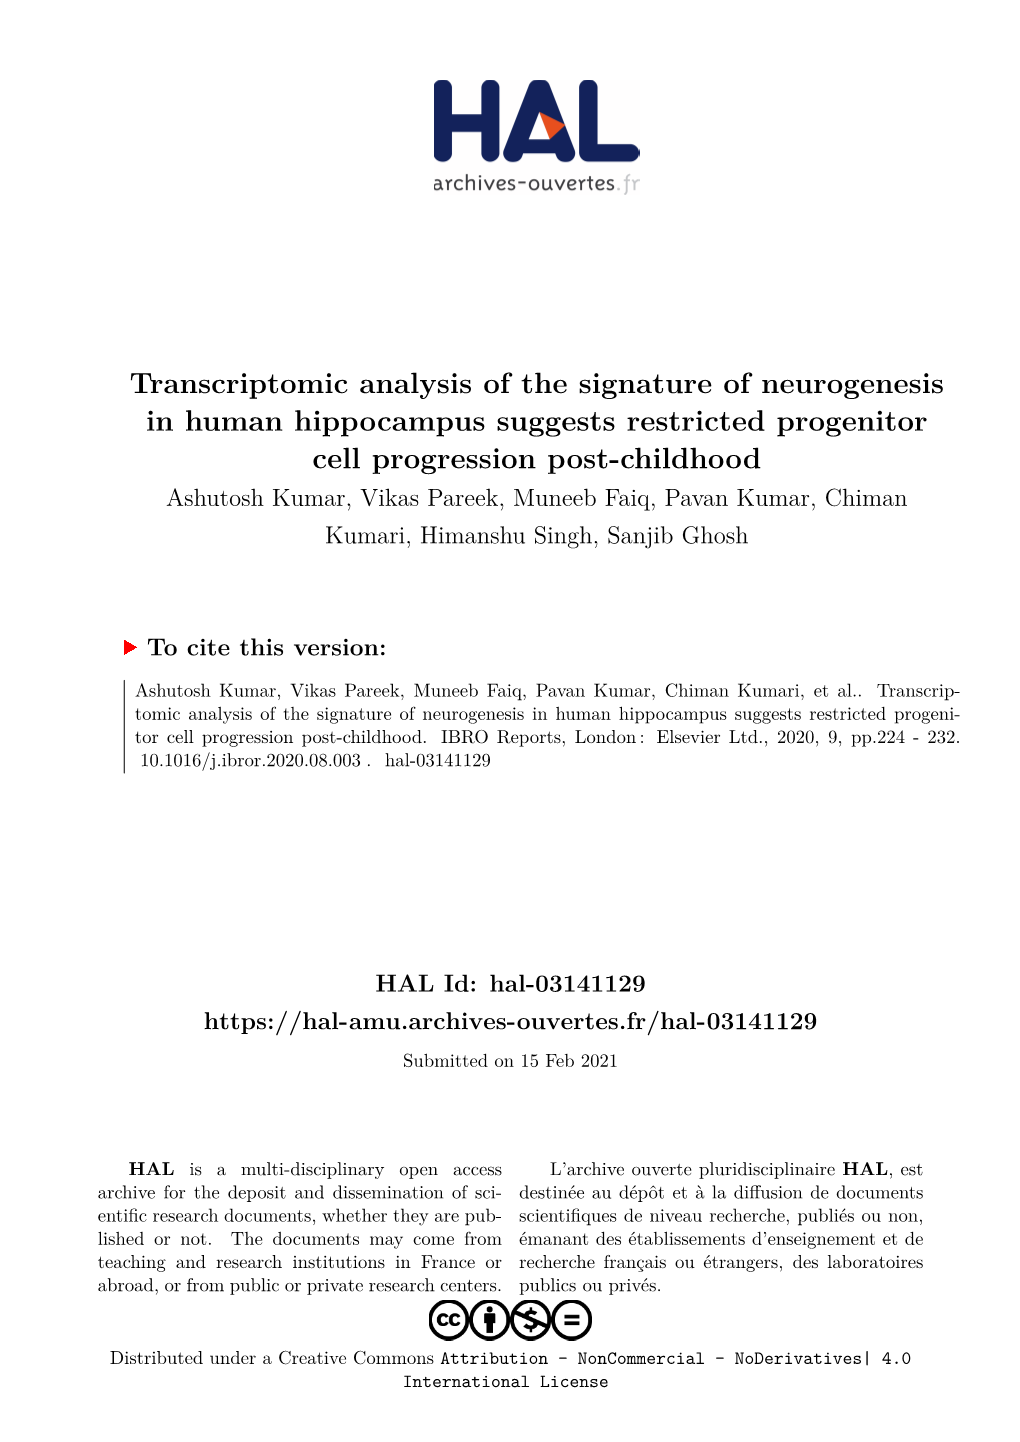 Transcriptomic Analysis of the Signature of Neurogenesis